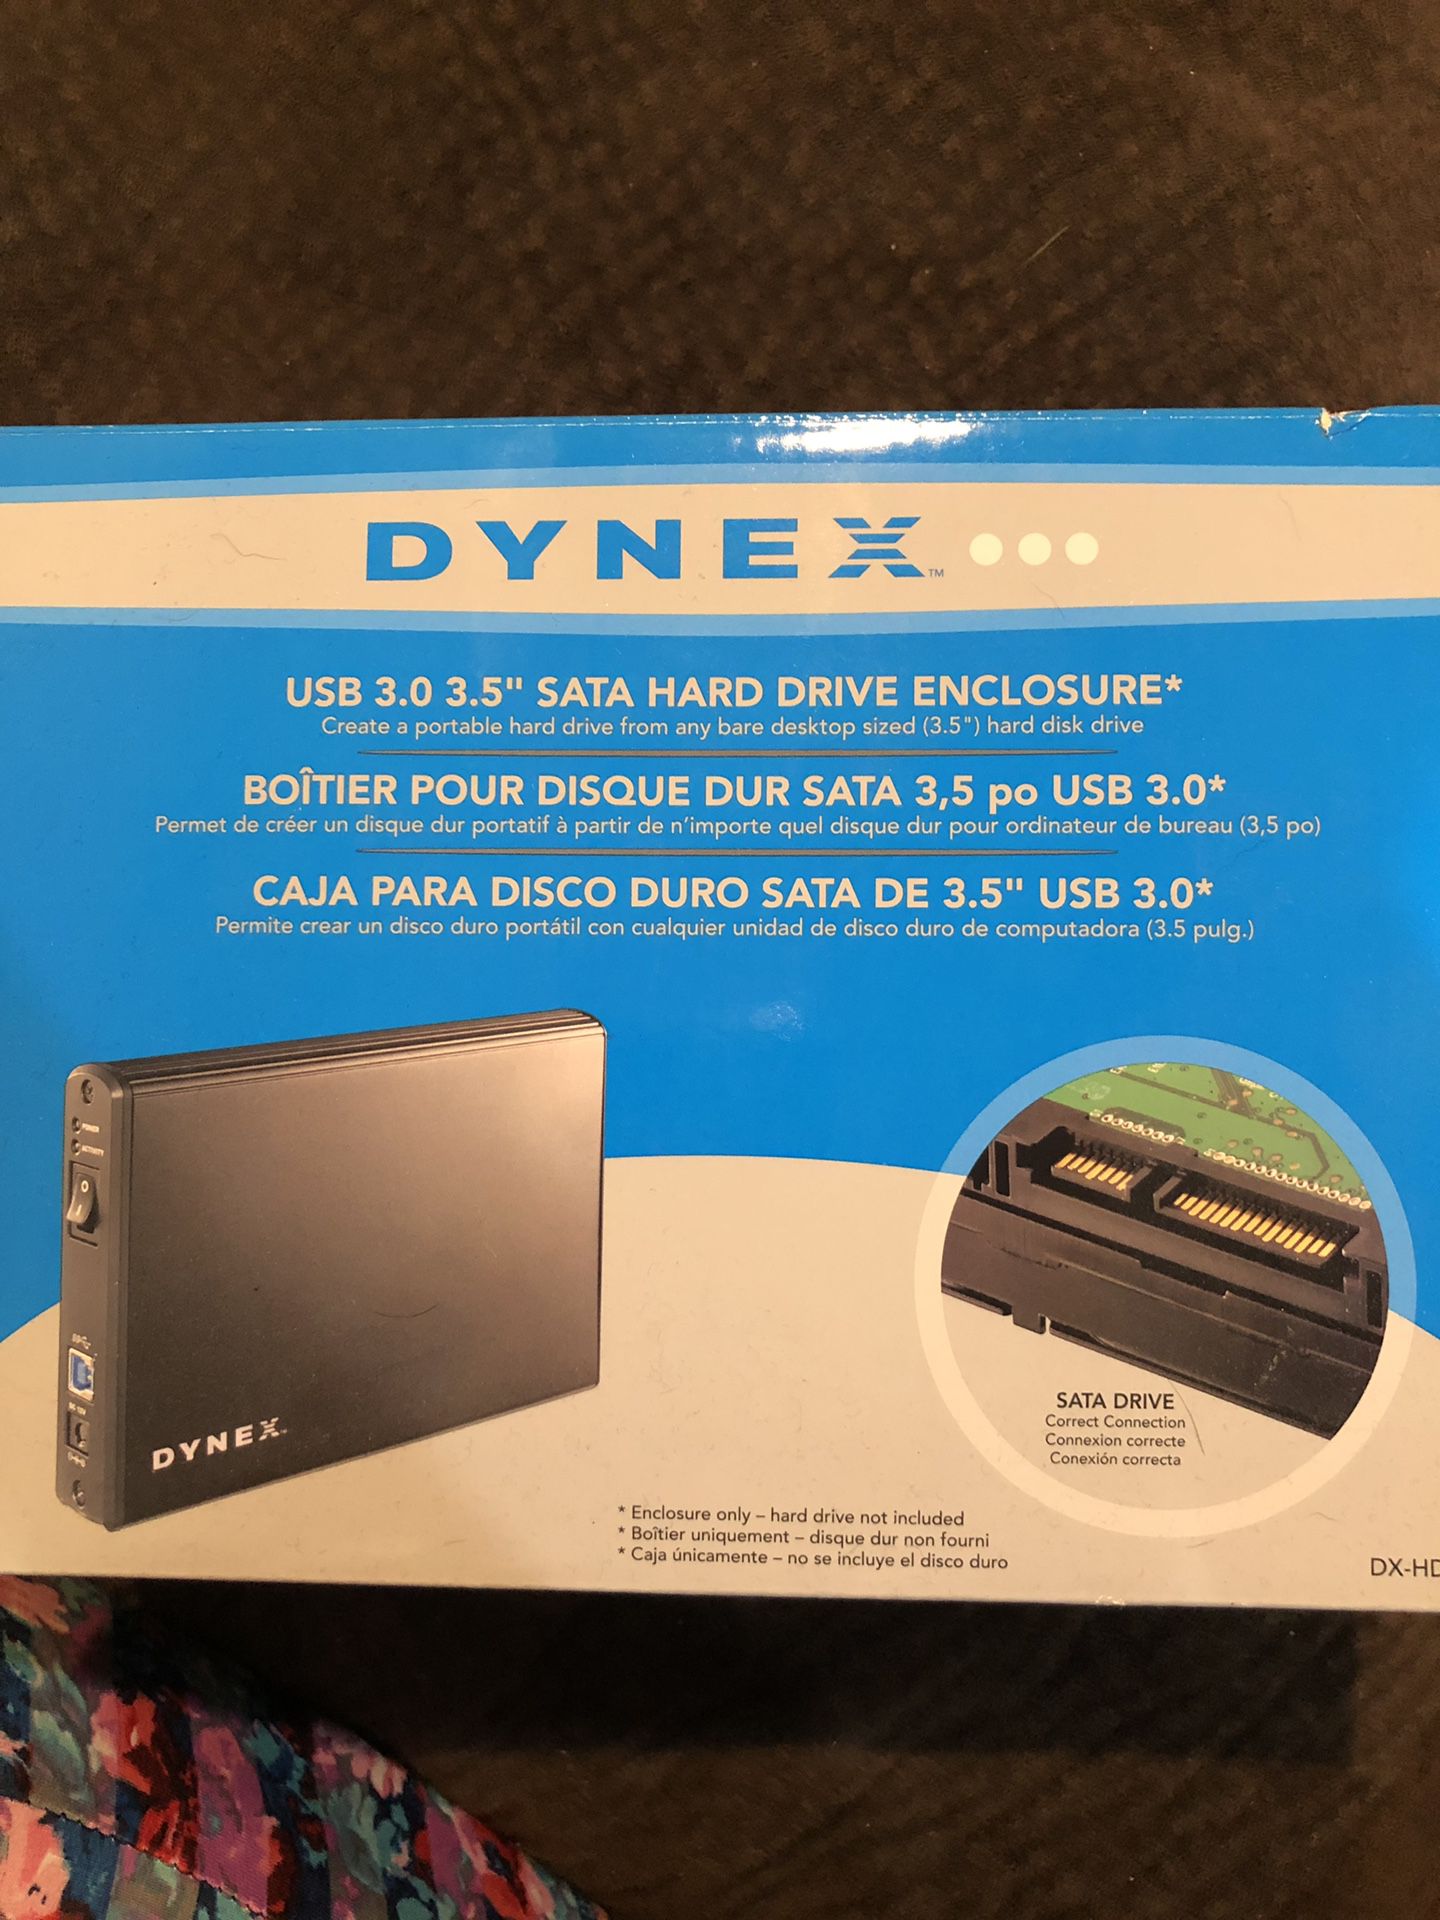 Dynex USB 3.0 3.5” SATA Hard Drive Enclosure